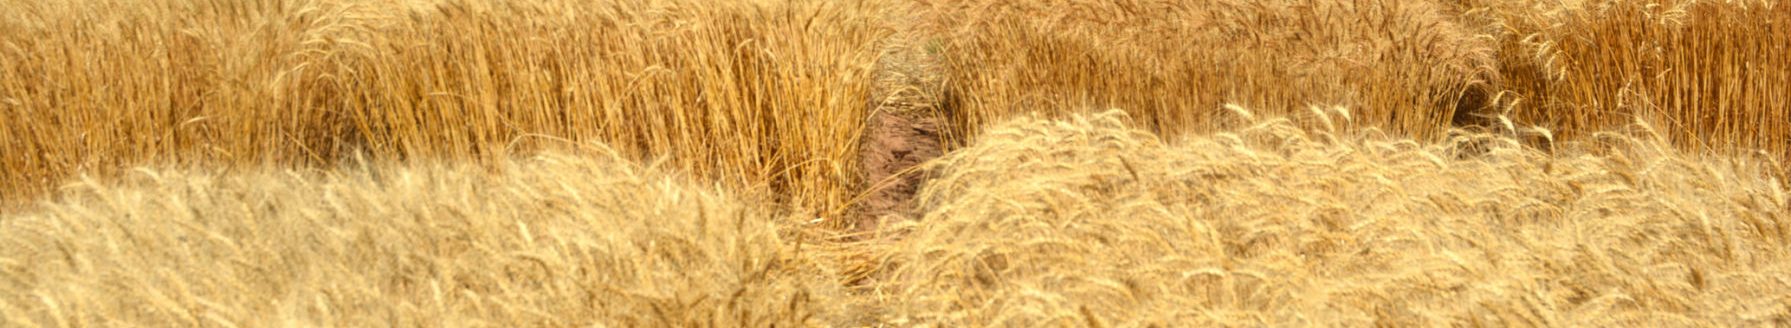 Texas A&M AgriLife Research wheat variety plots near Bushland will provide good yield data. (Texas A&M AgriLife Communications courtesy photo by Kay Ledbetter.)